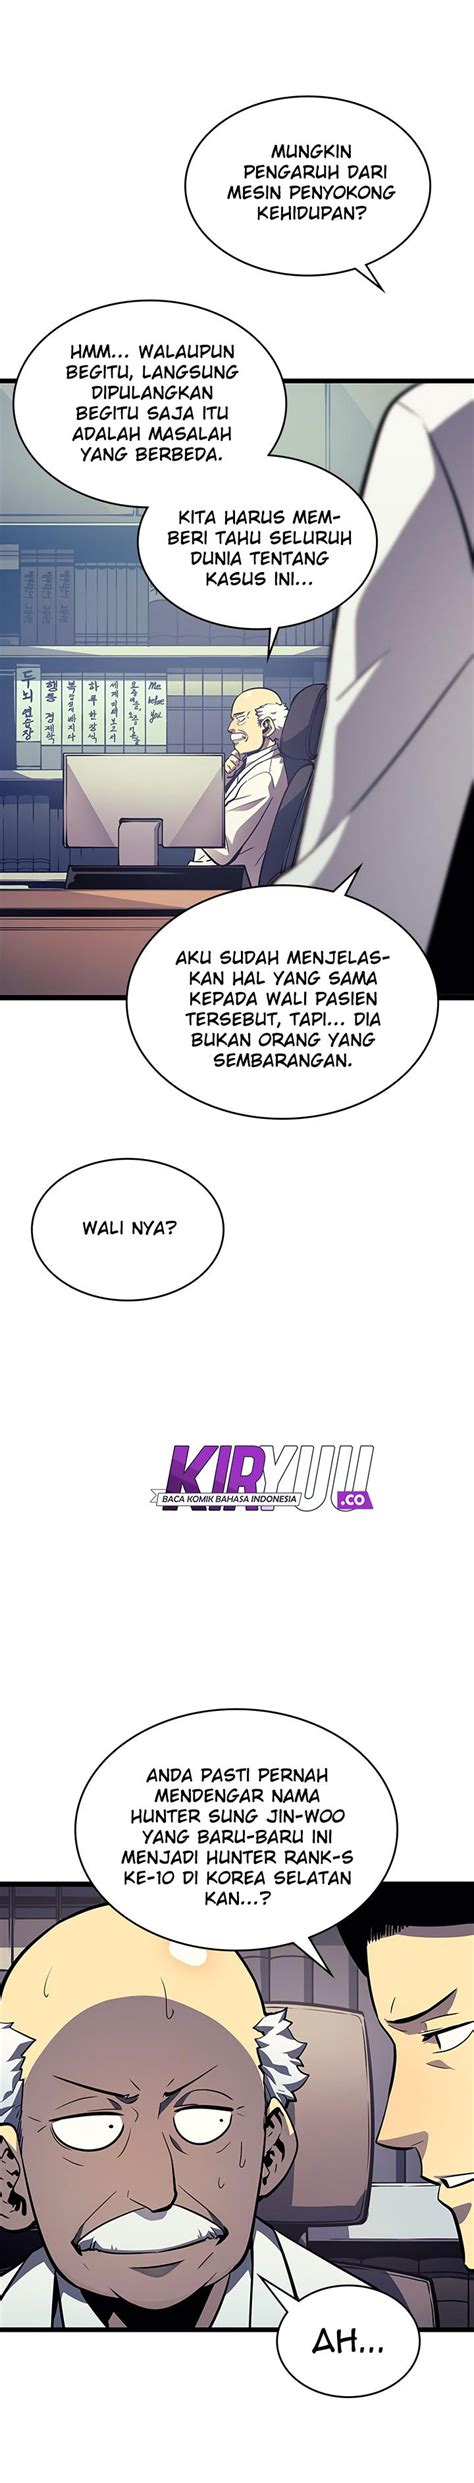 Baca komik solo leveling bahasa indonesia lengkap di komikindo. Komik Solo Leveling Chapter 90 Bahasa Indonesia - Komikmama